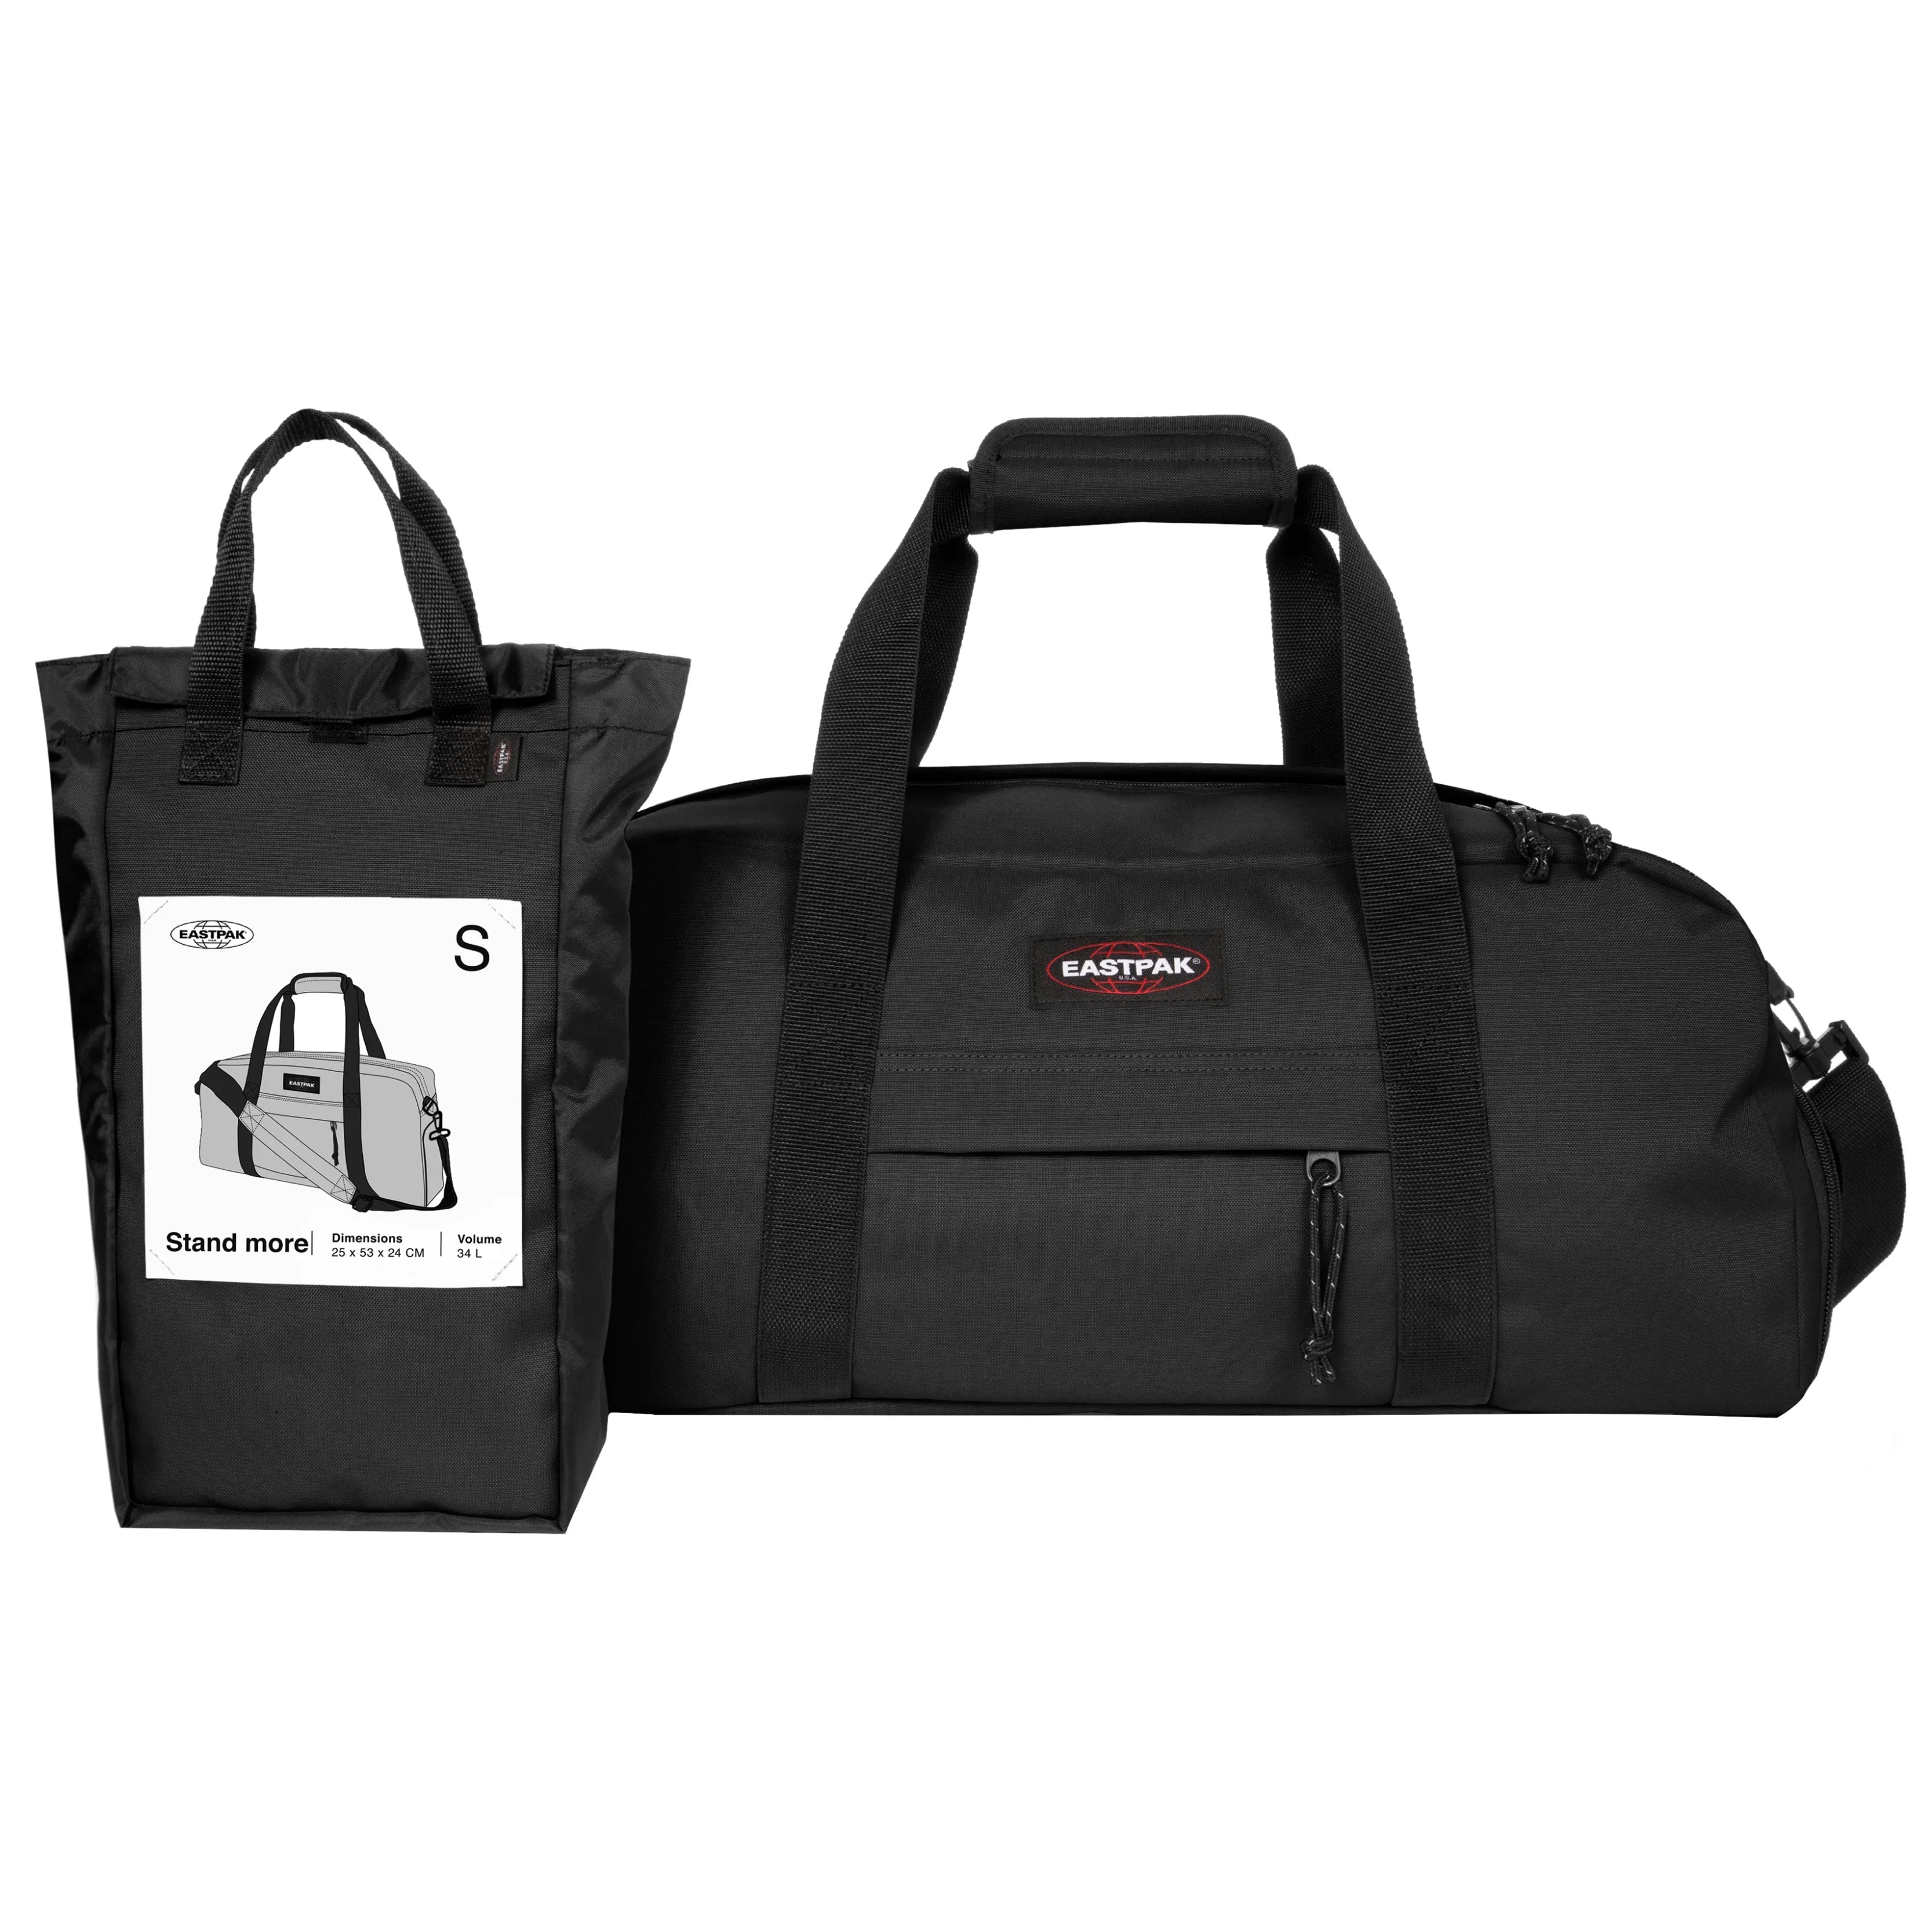 Eastpak Authentic Travel Stand More Travel Bag 53 cm - Black